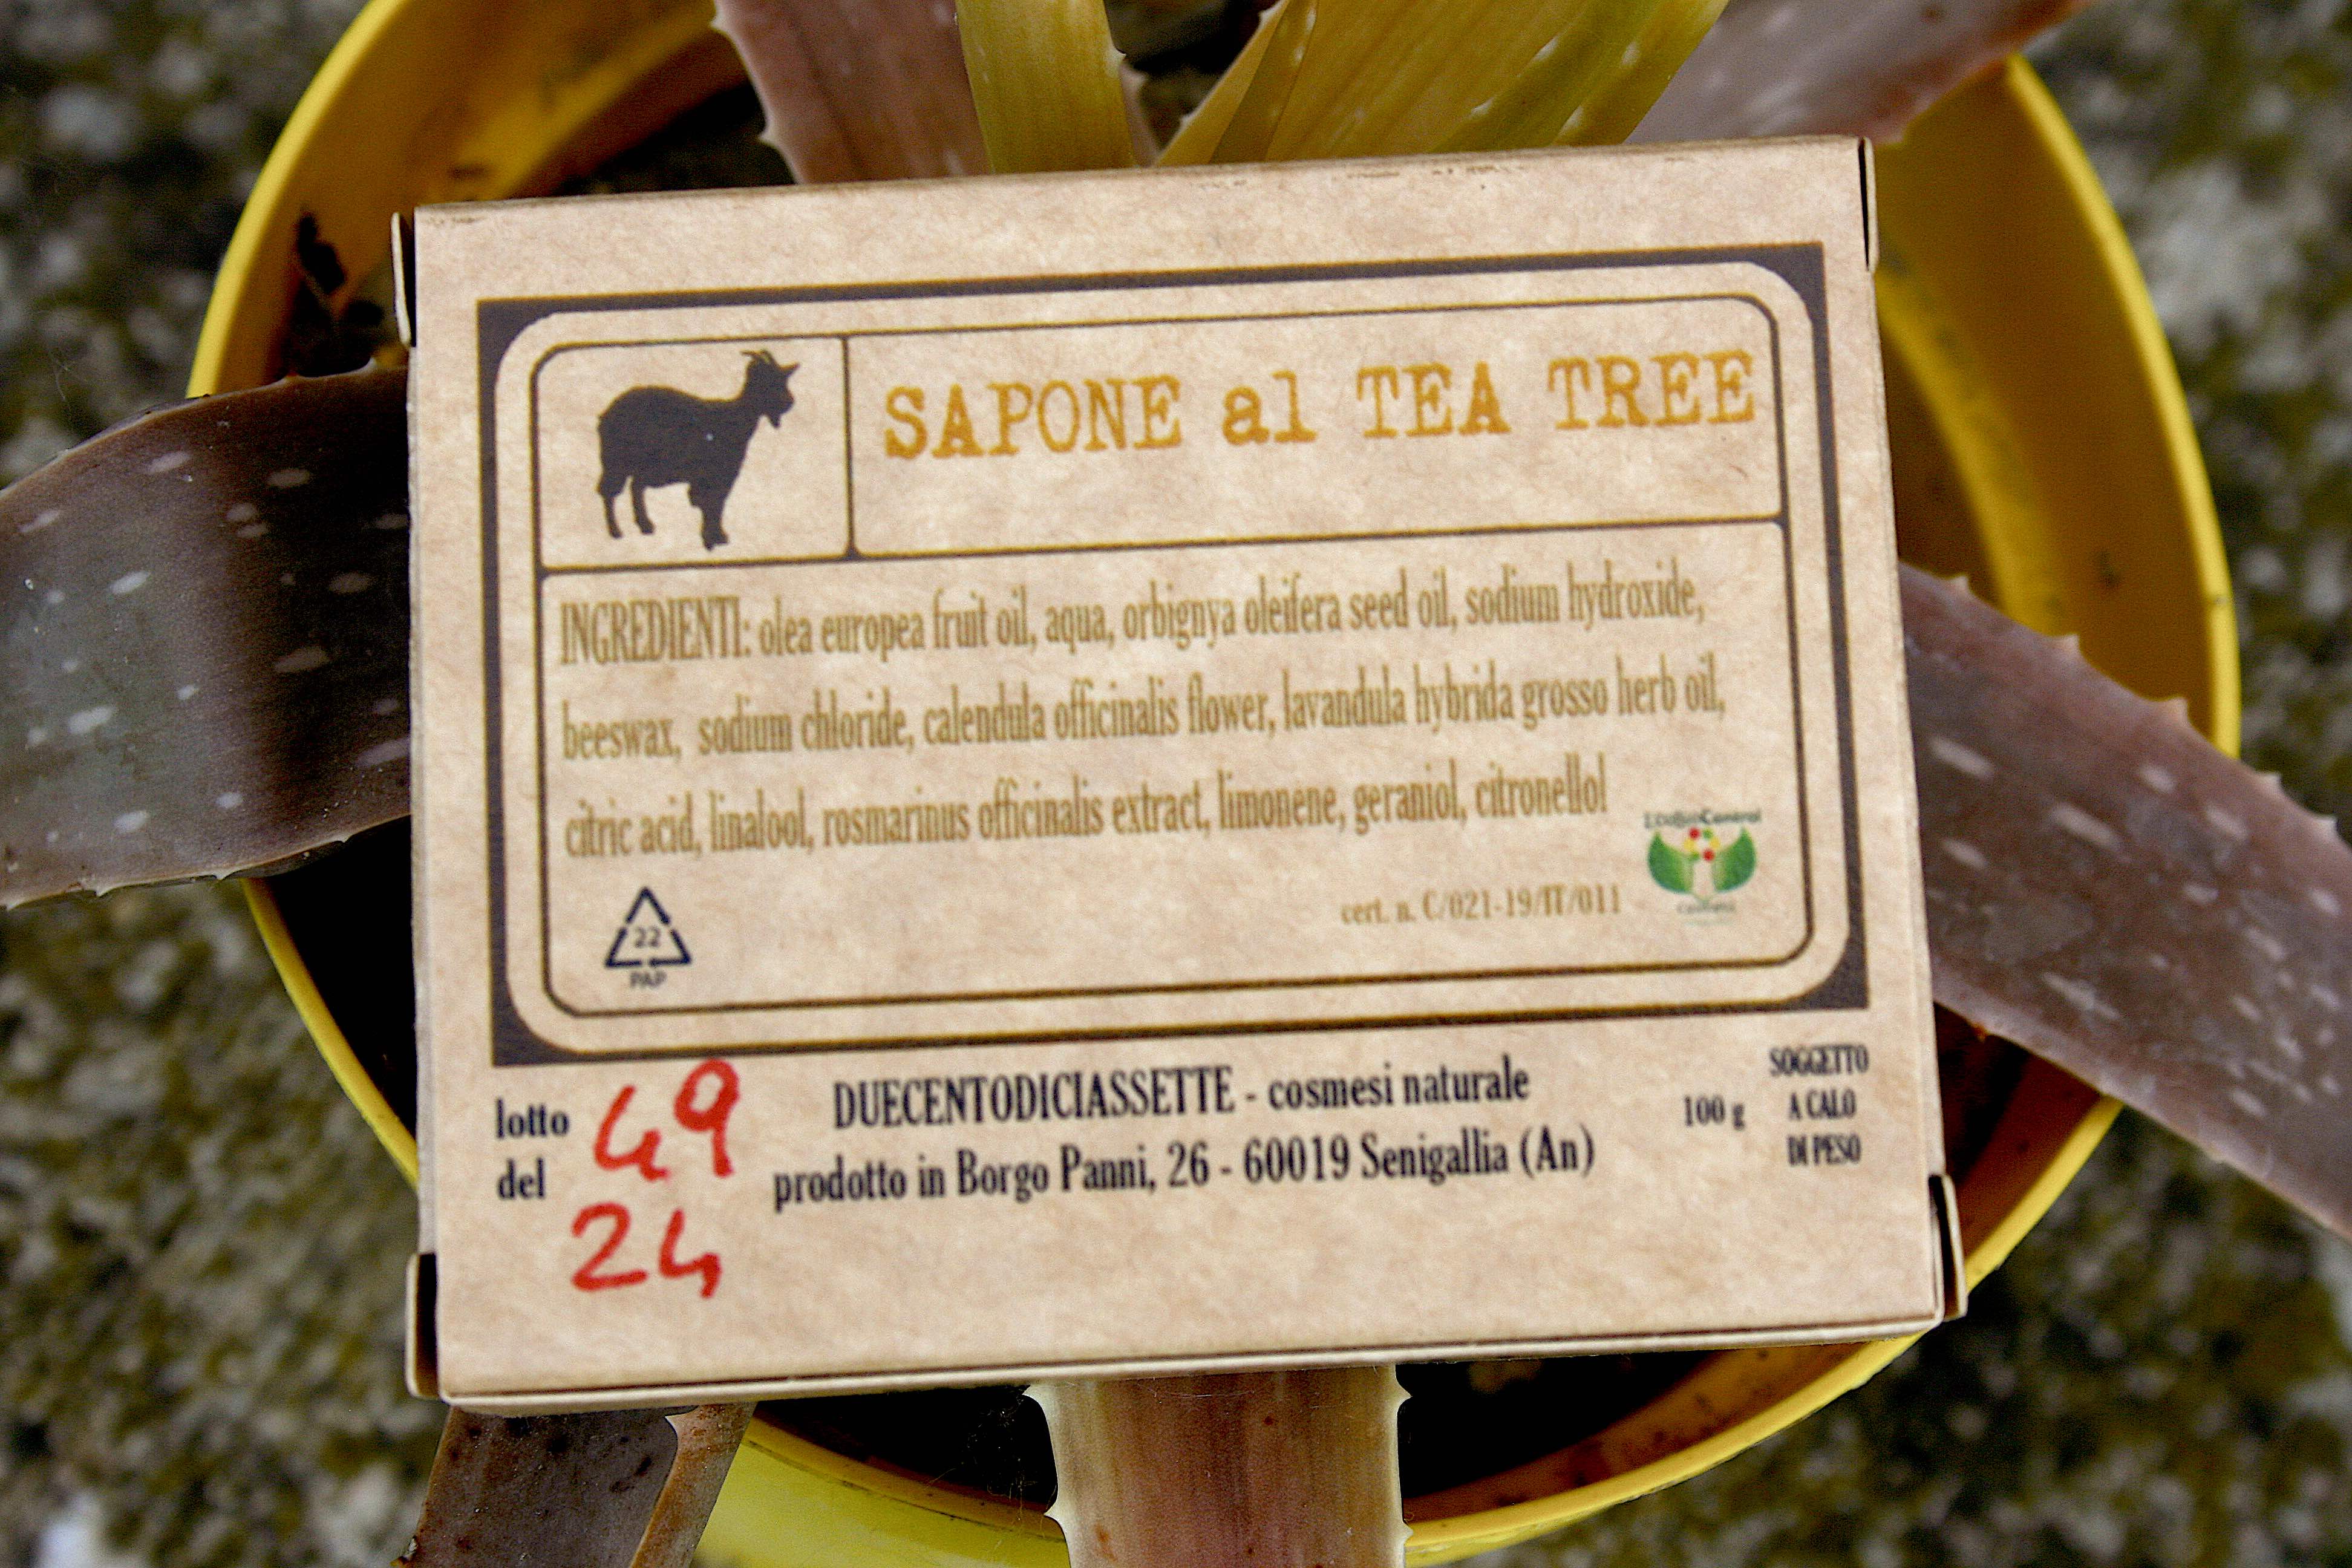 Sapone al Tea Tree Oil